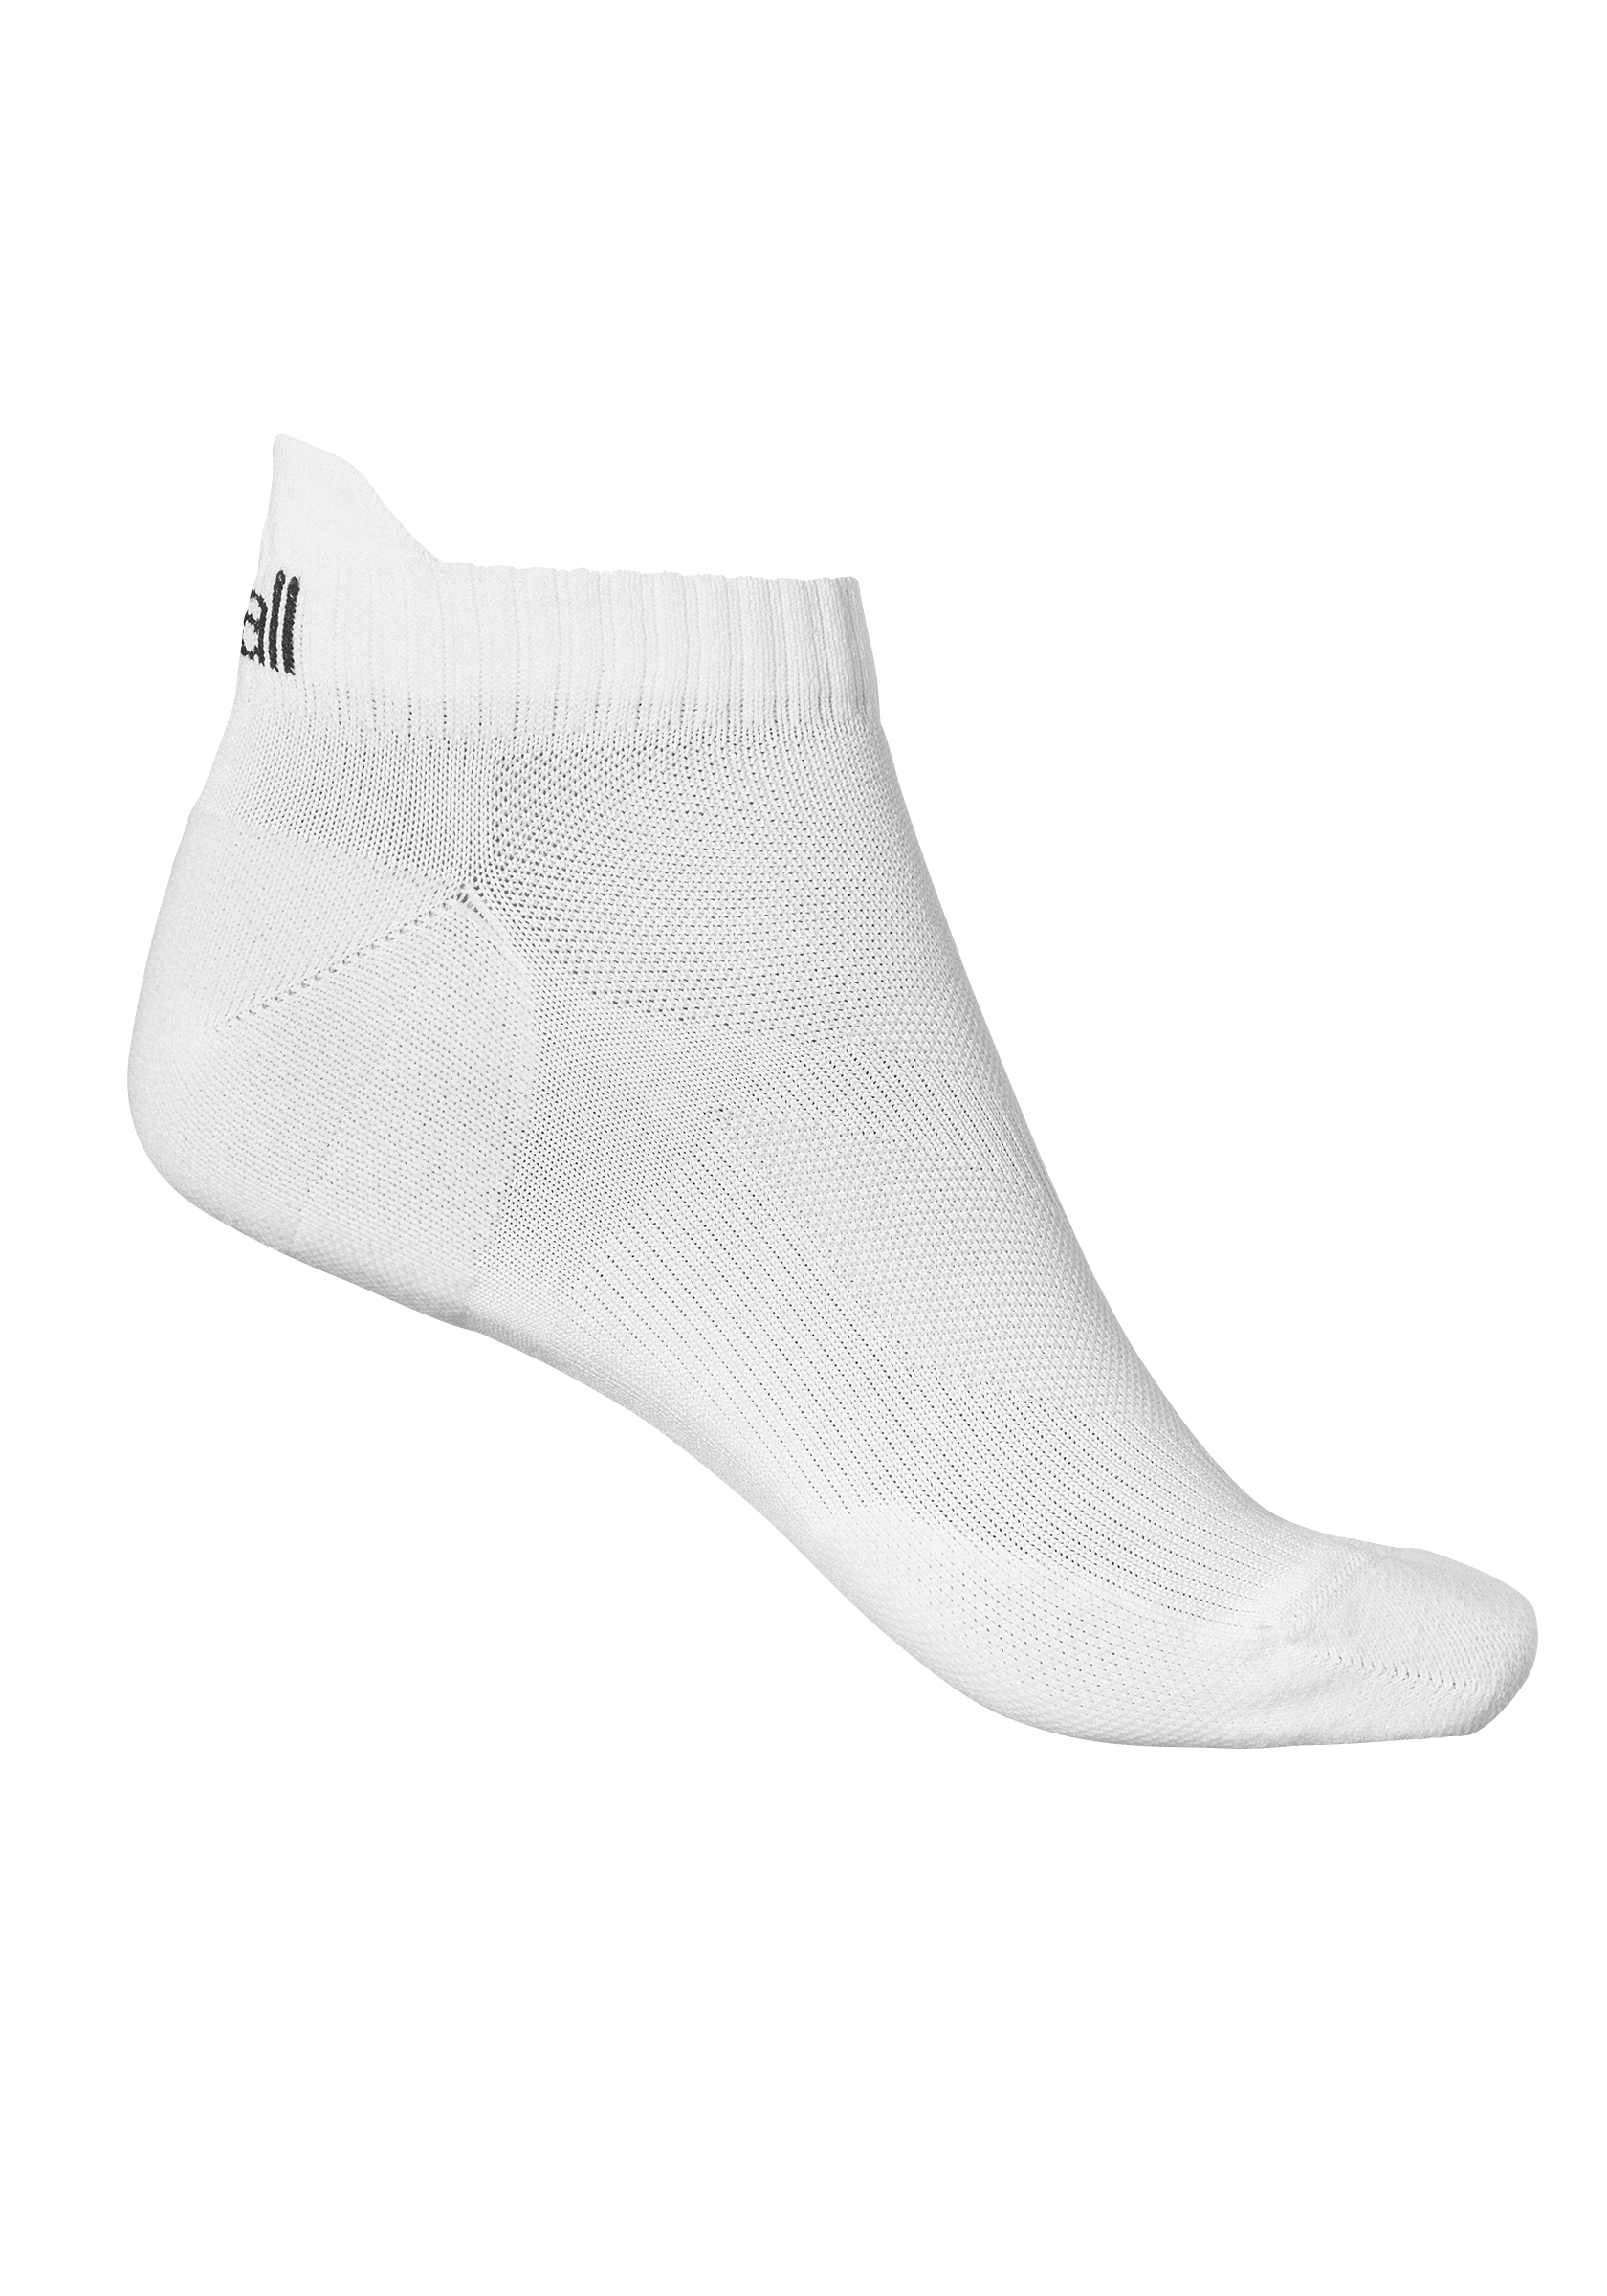 casall.com | Run sock - White